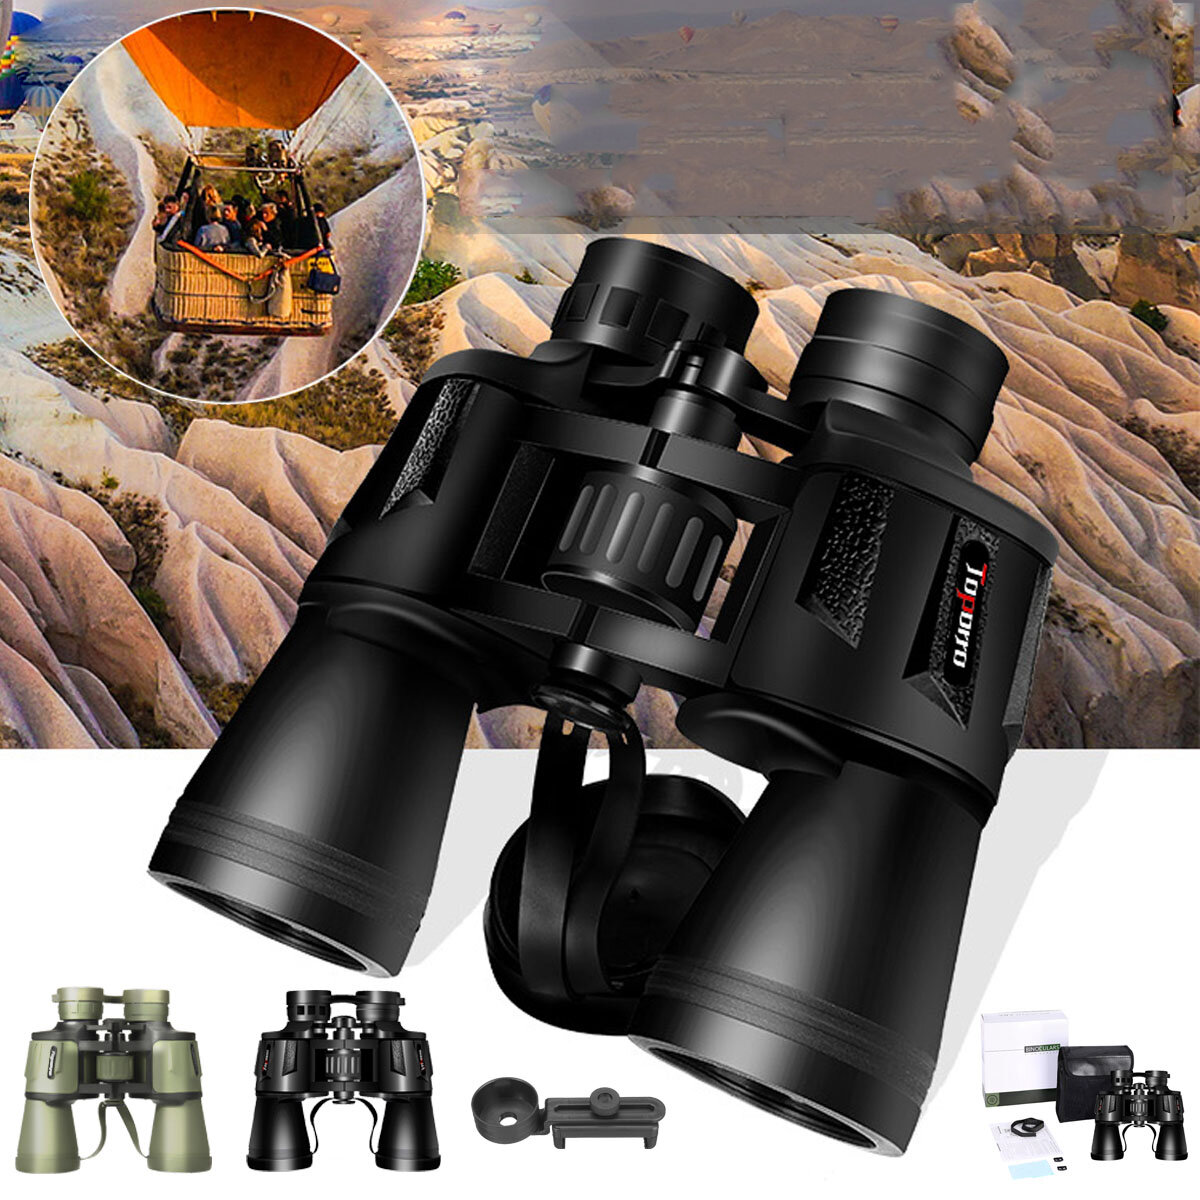 20X50 Υψηλής απόδοσης επαγγελματικό τηλεσκόπιο HD με νυχτερινή όραση για κάμπινγκ και ταξίδια στη φύση.